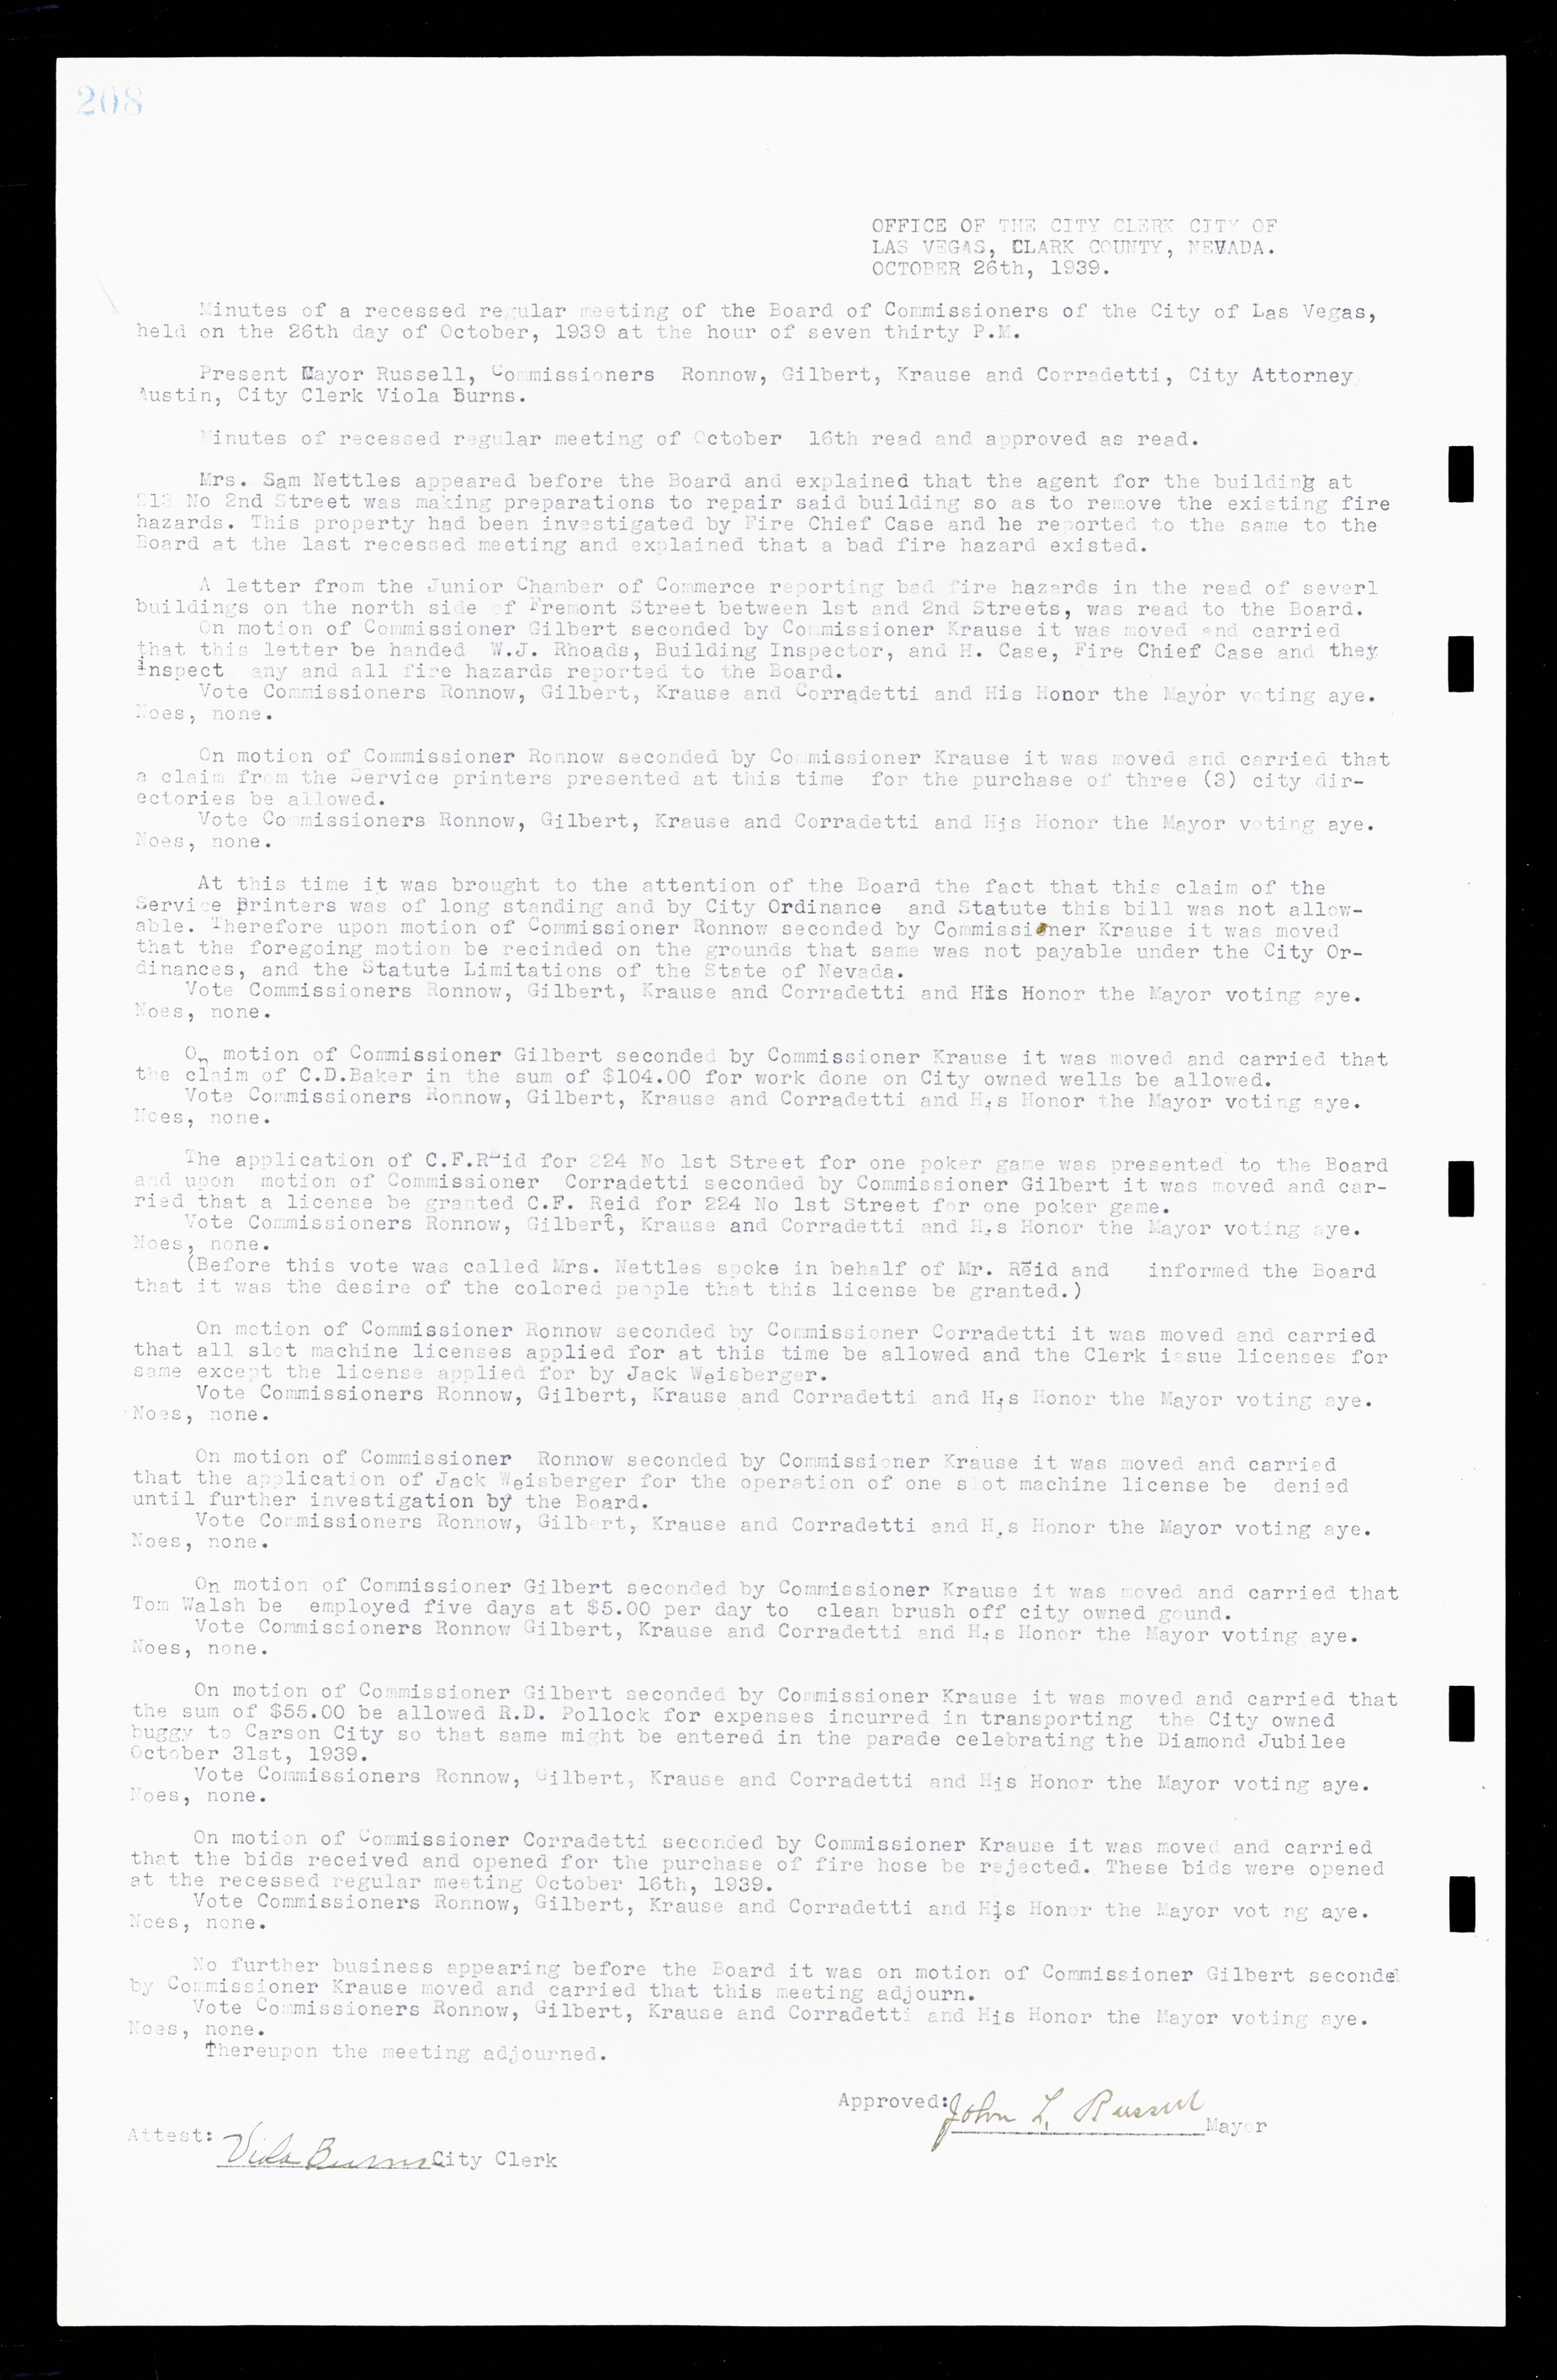 Las Vegas City Commission Minutes, February 17, 1937 to August 4, 1942, lvc000004-226